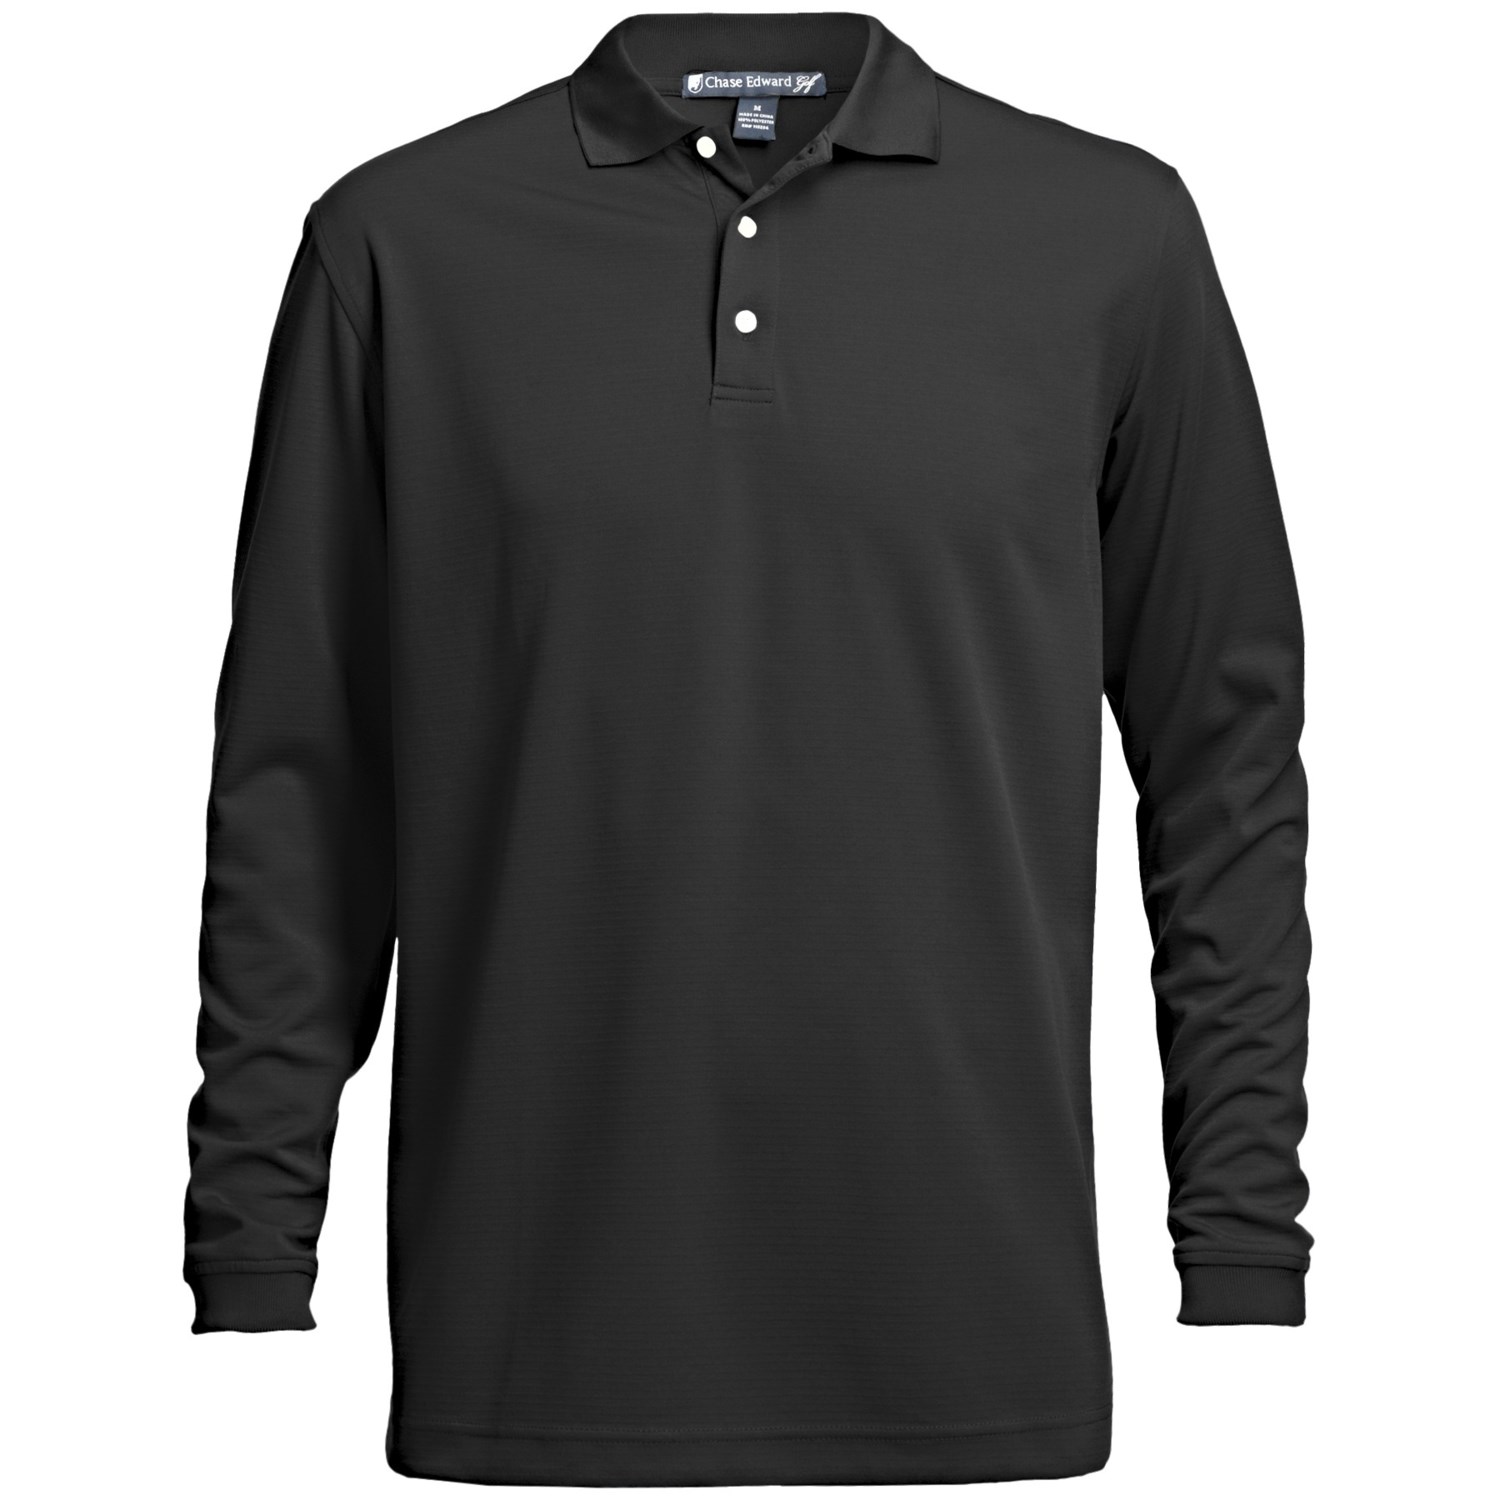 Chase Edward Golf Polo Shirt (For Men) 5618M - Save 56%